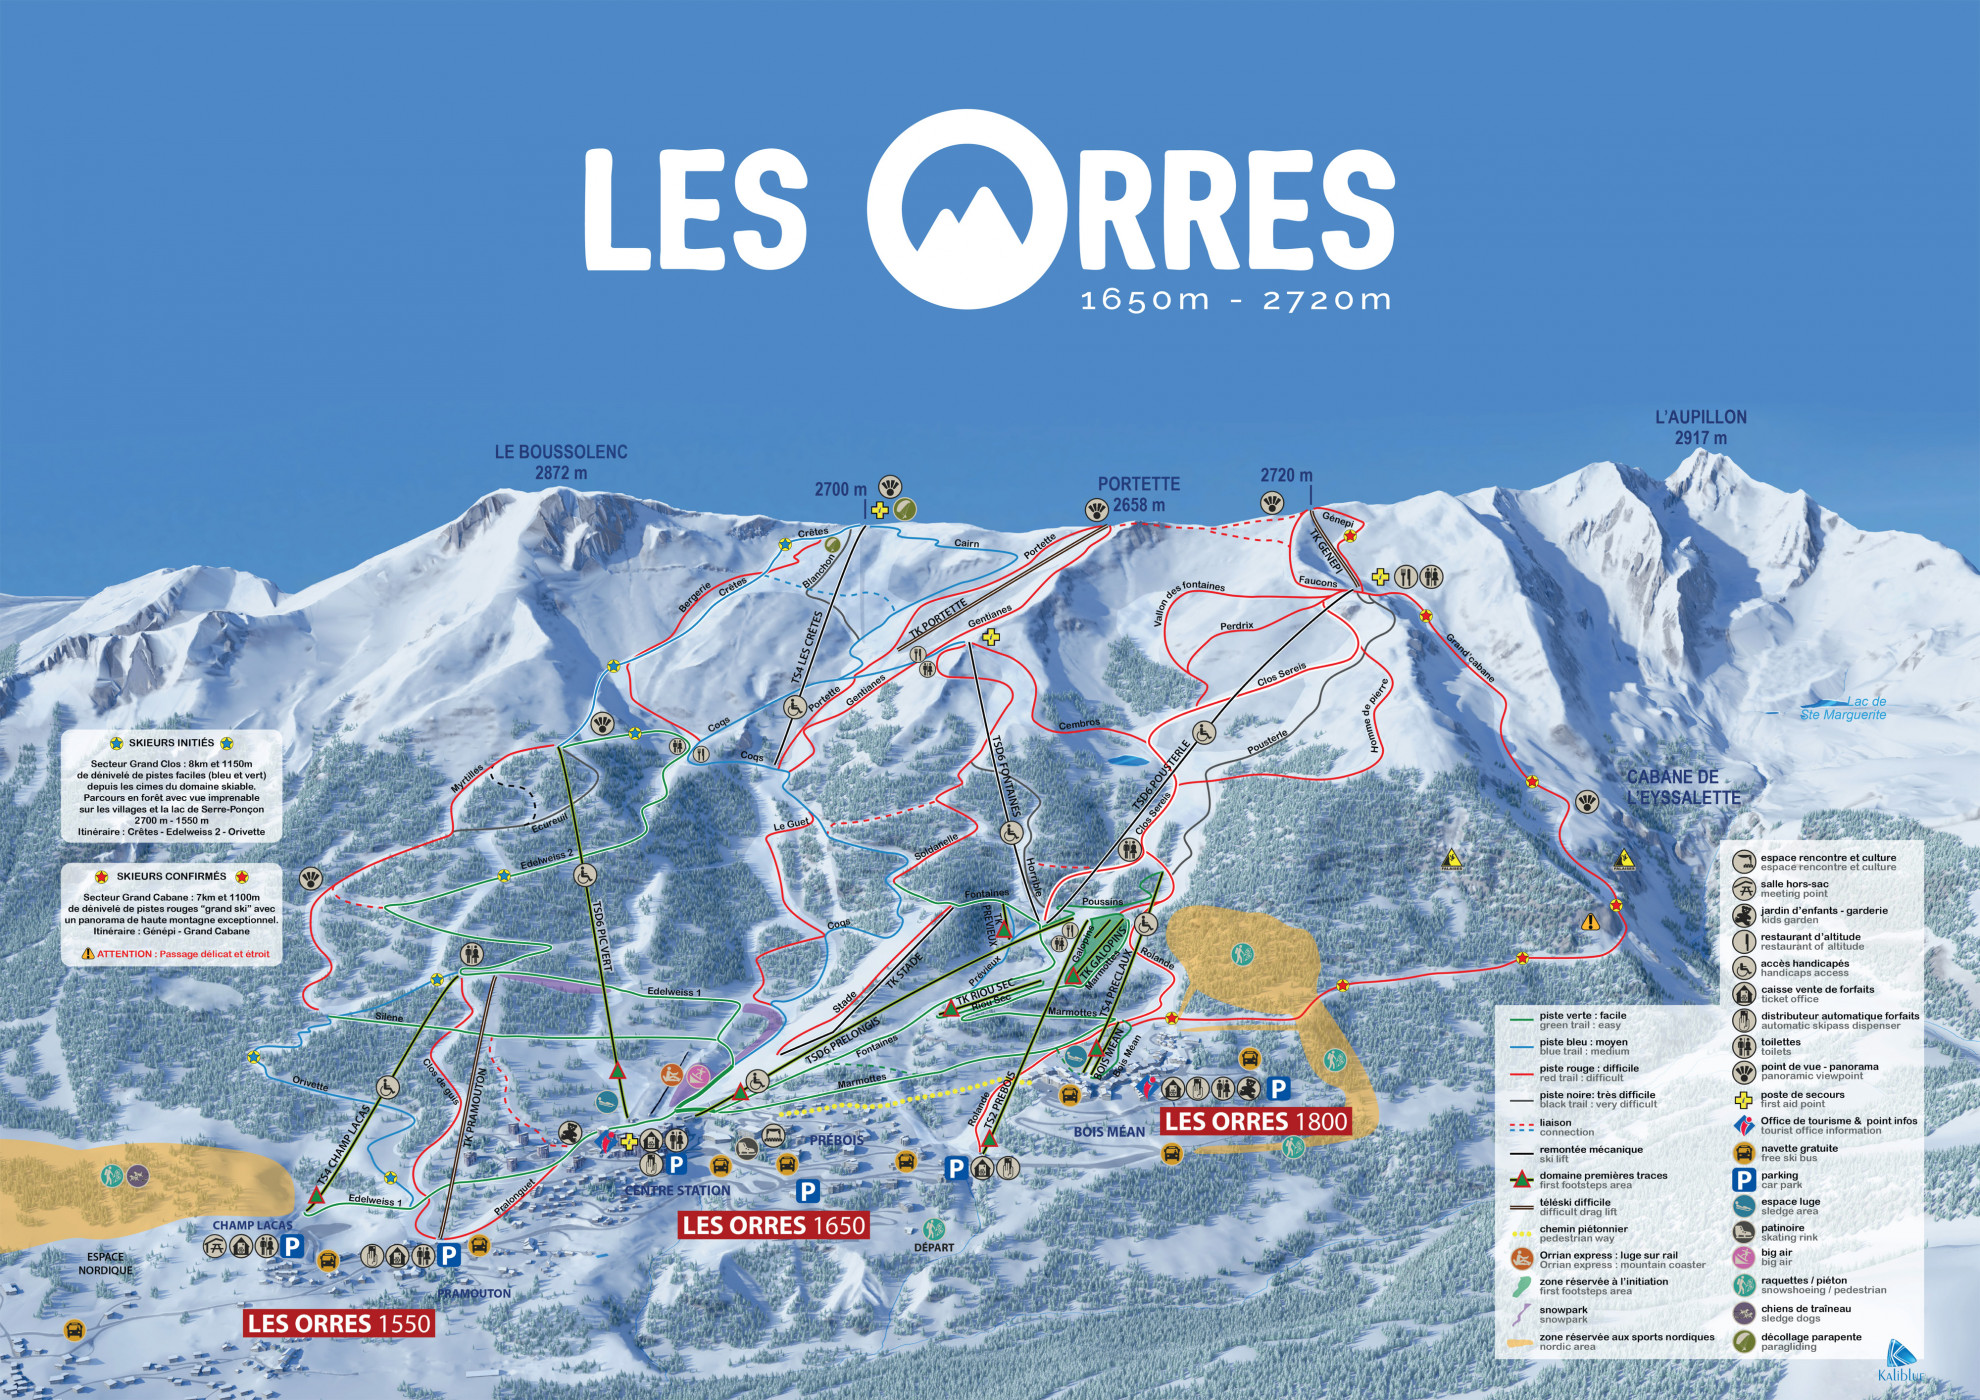 lesorres planpistes2018 2019 - Les Orres – Skijanje za sve: djecu, početnike, obitelj i profesionalce